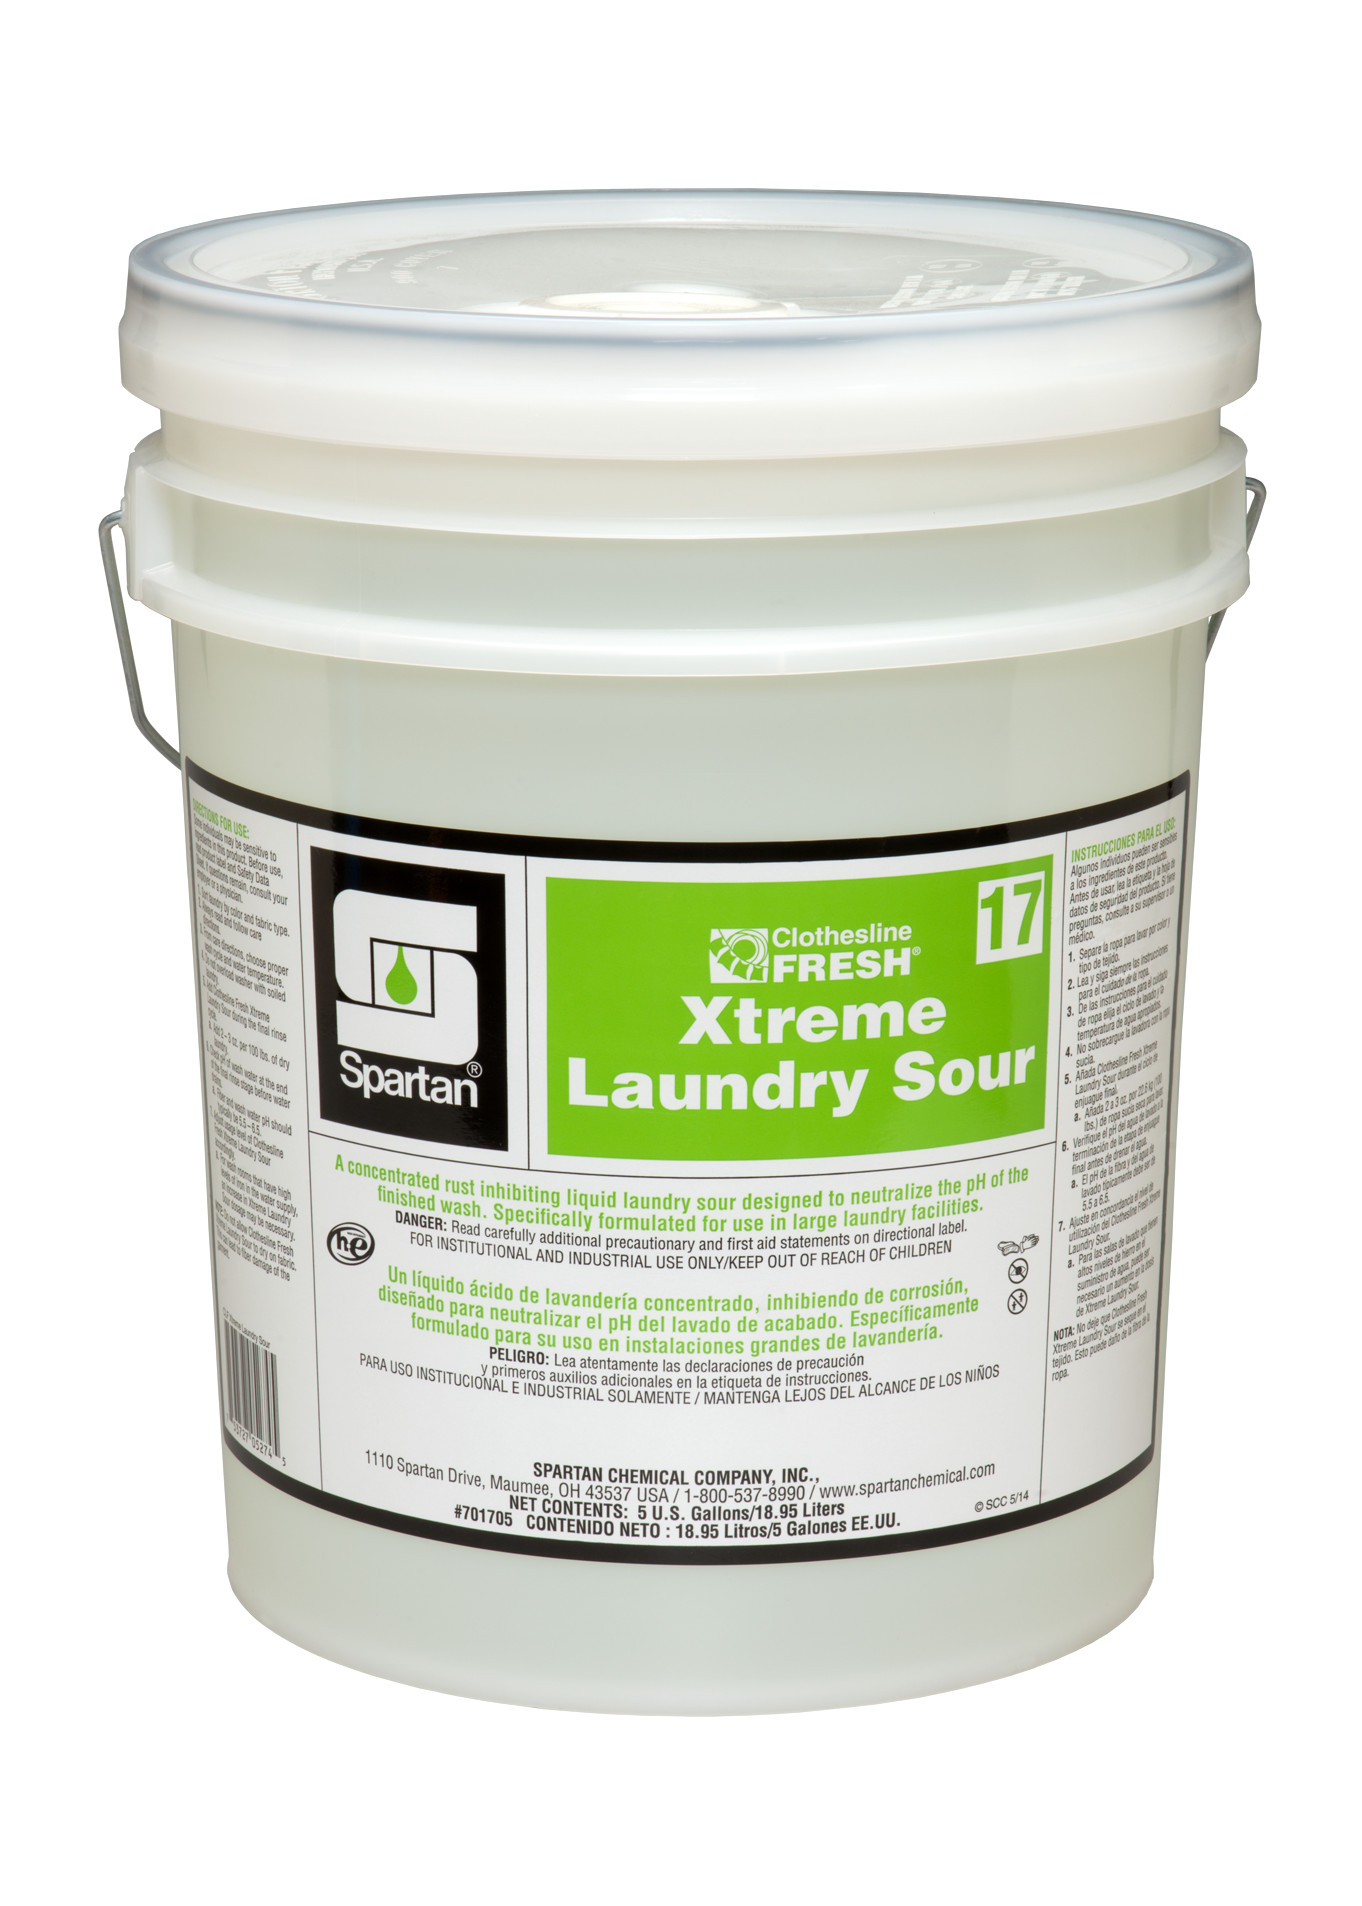 Spartan Chemical Company Clothesline Fresh Xtreme Laundry Sour 17, 5 GAL PAIL